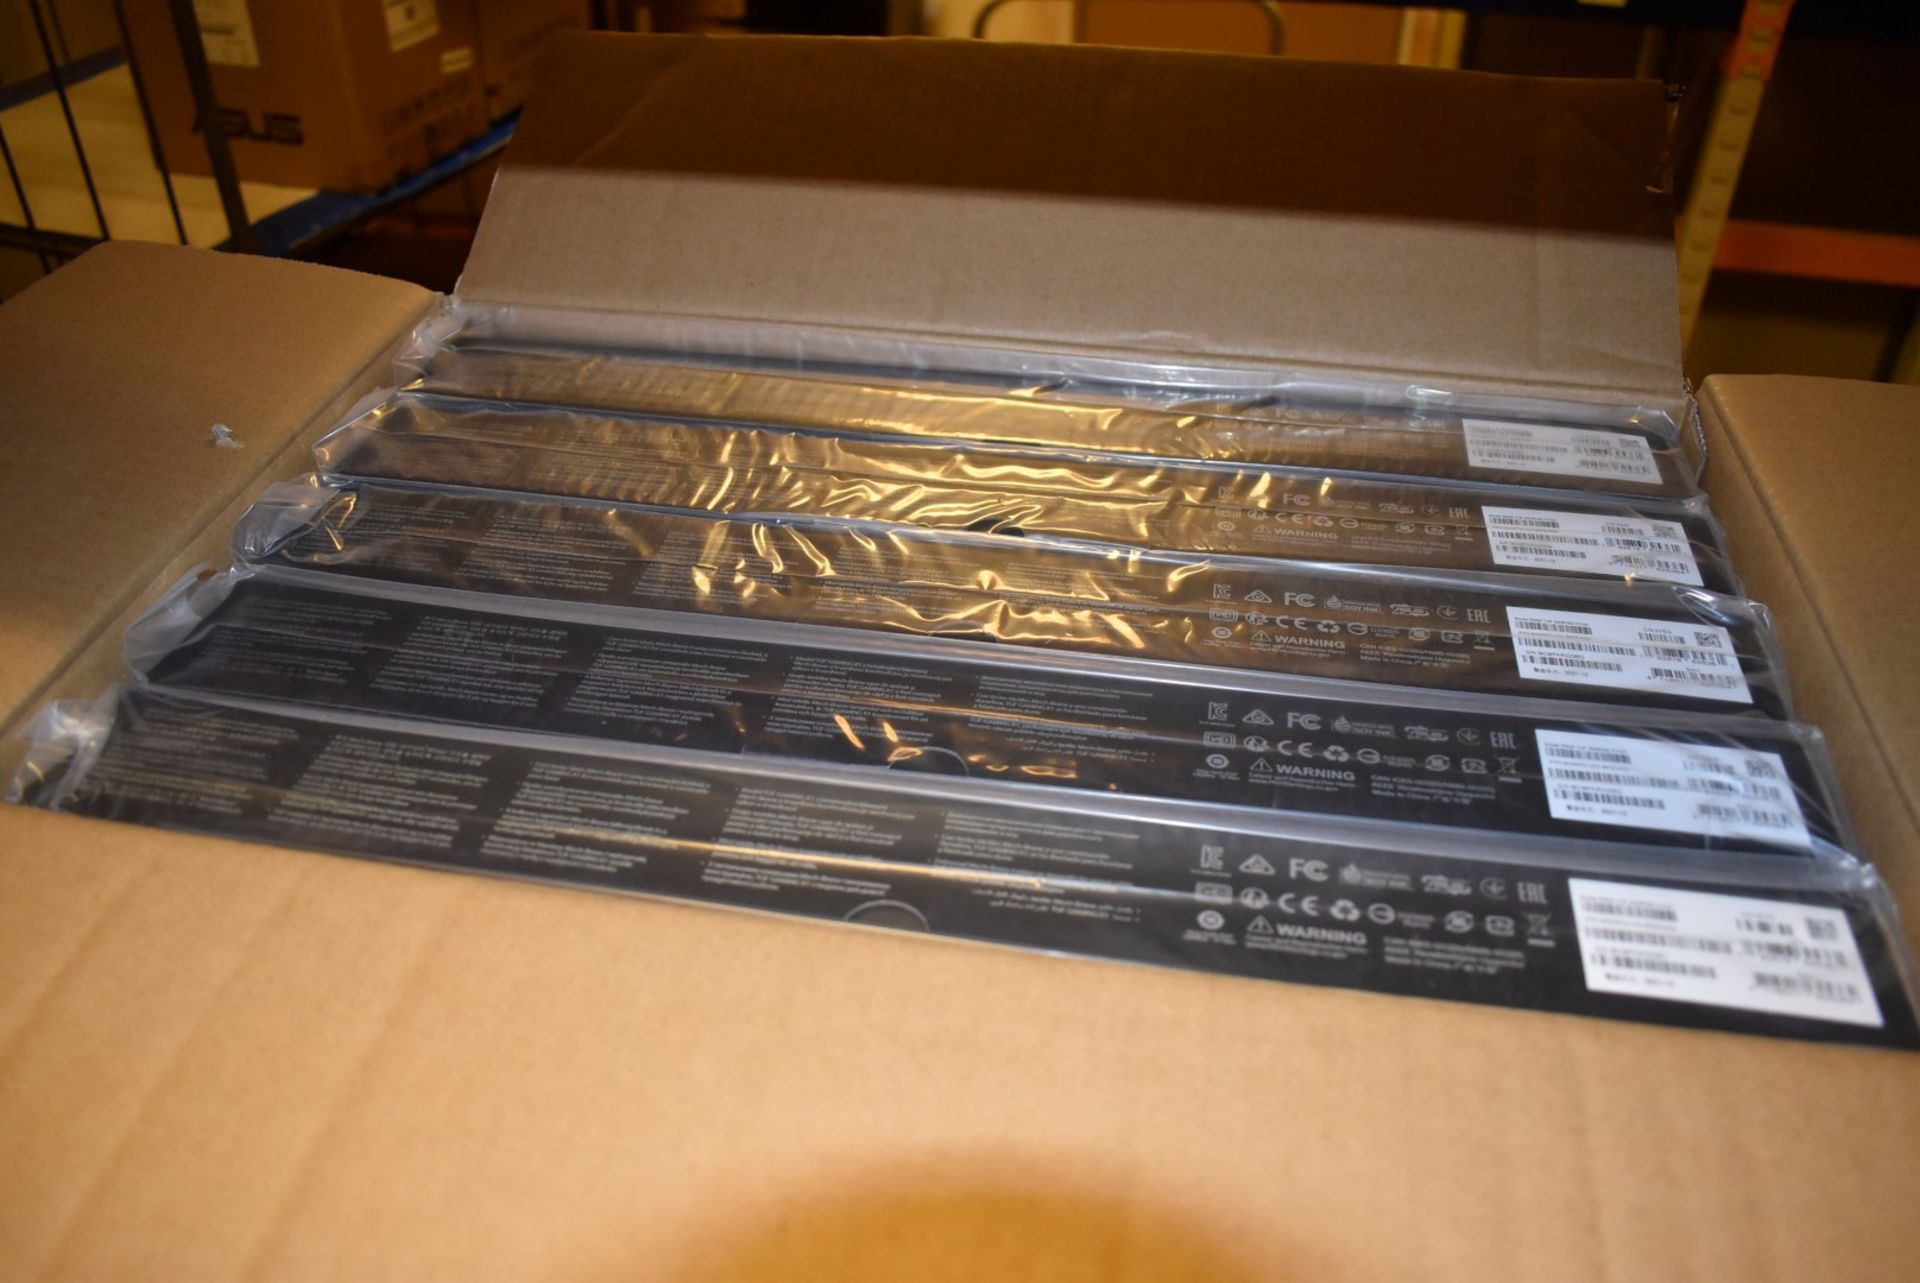 5 x Asus TUF K1 RGB Gaming Keyboard - New Boxed Stock - RRP £249.99 - Image 2 of 2